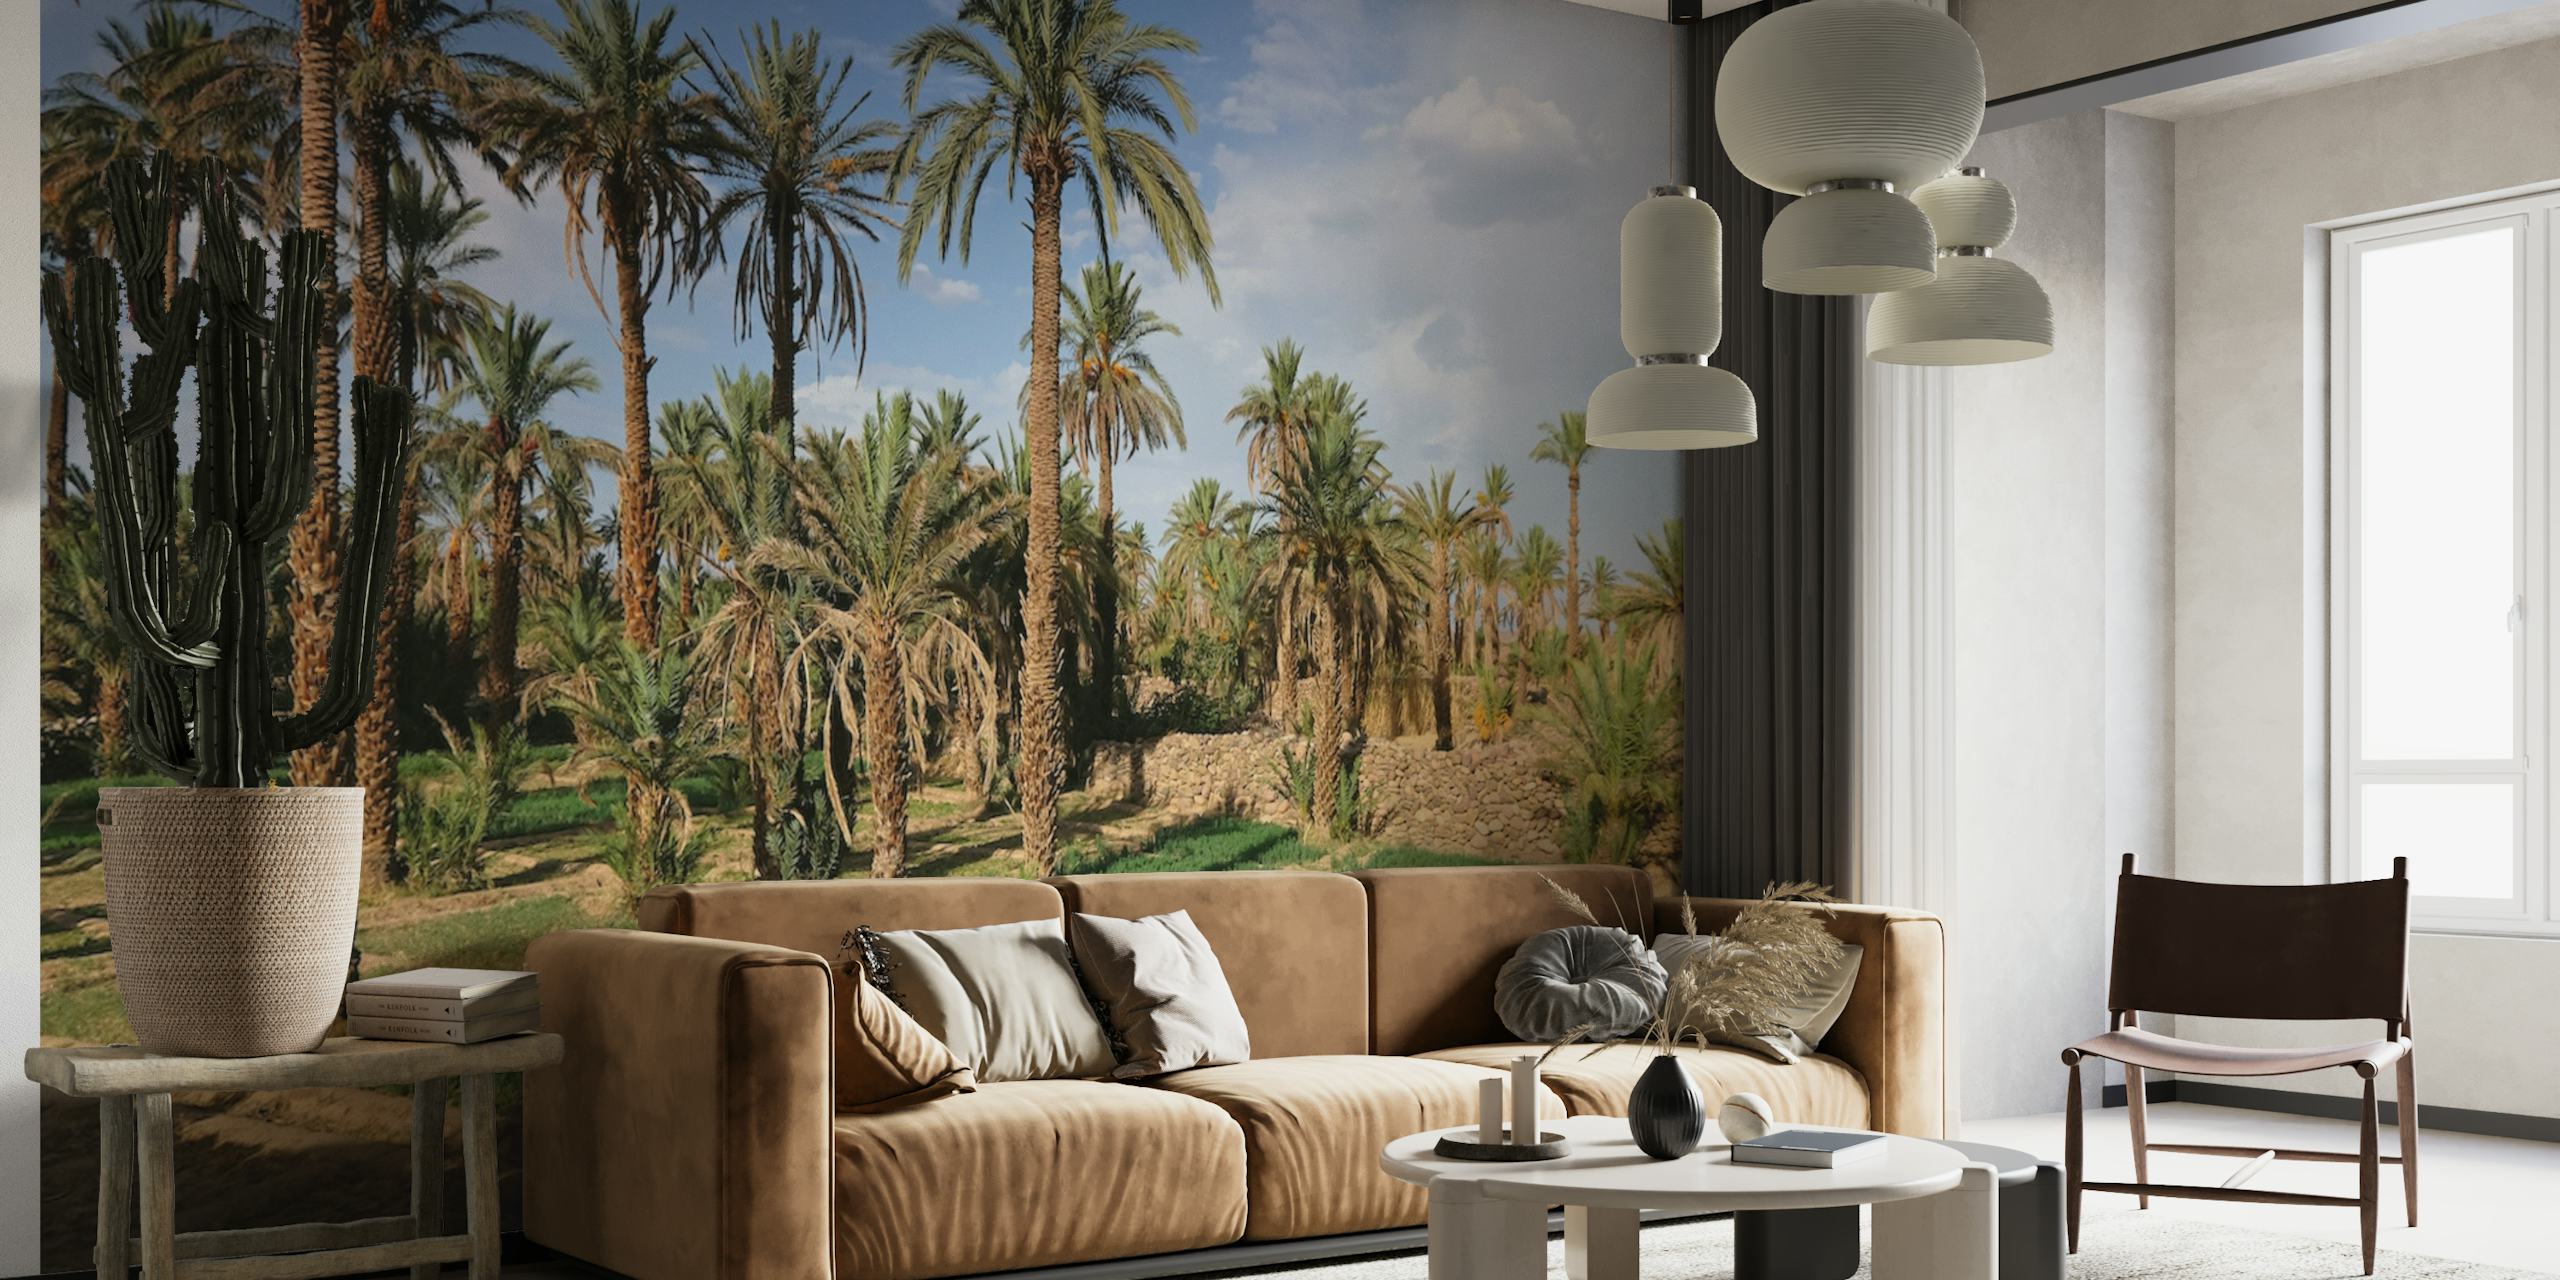 Palmtree Oasis in Marokko fotobehang met een rustig bosje met weelderige palmbomen en groen struikgewas